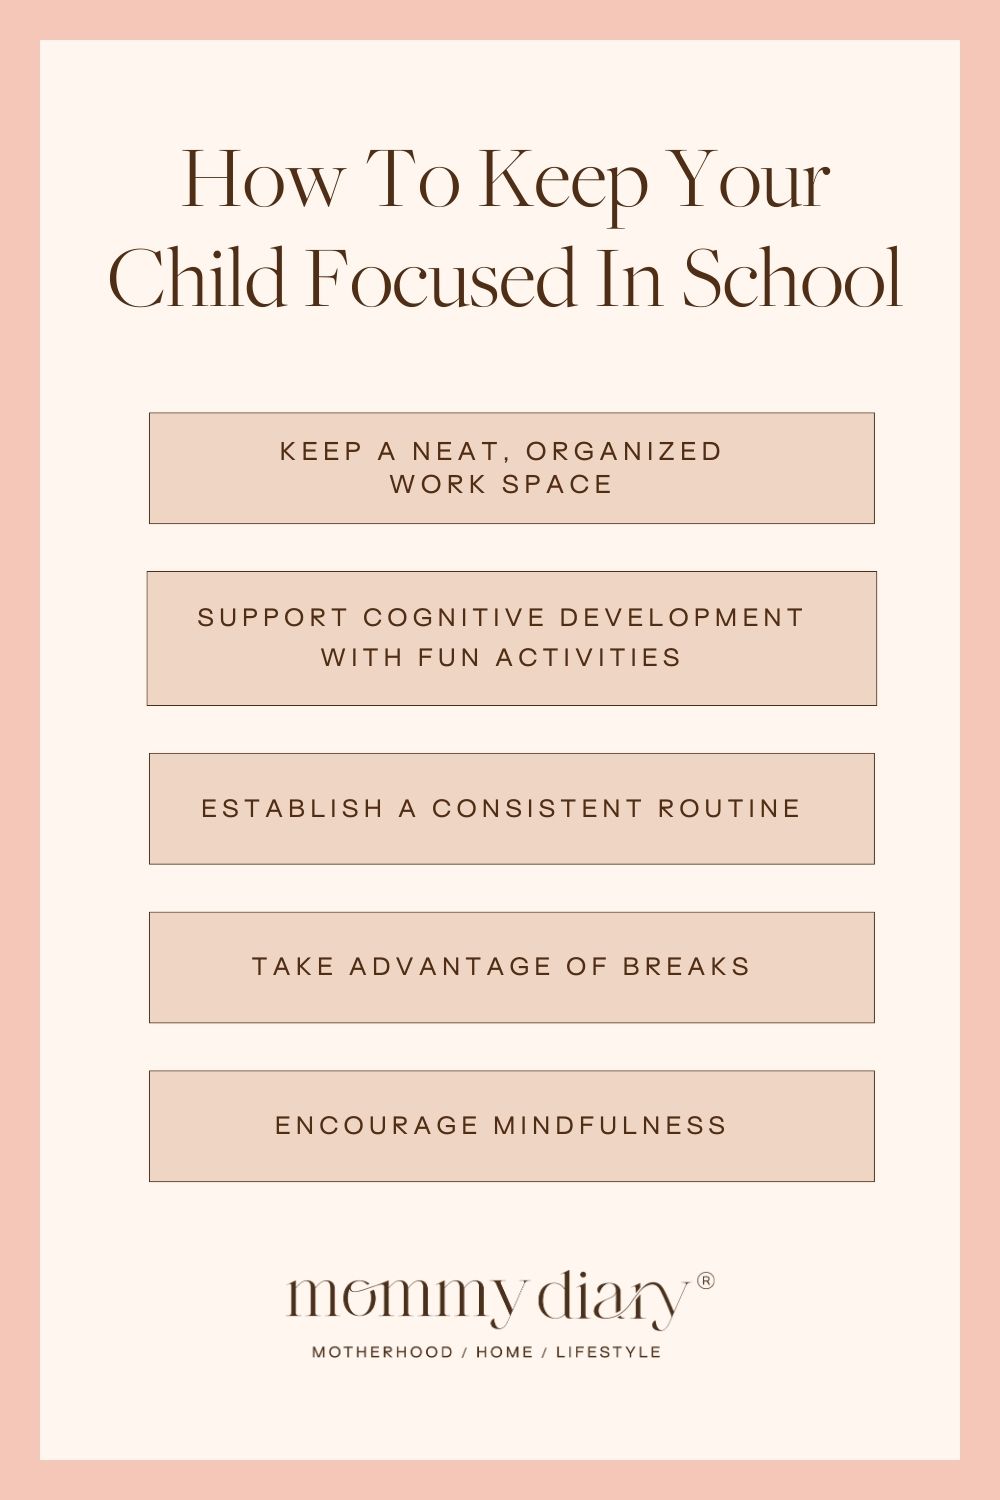 List of Ways to Keep Child Focused In School